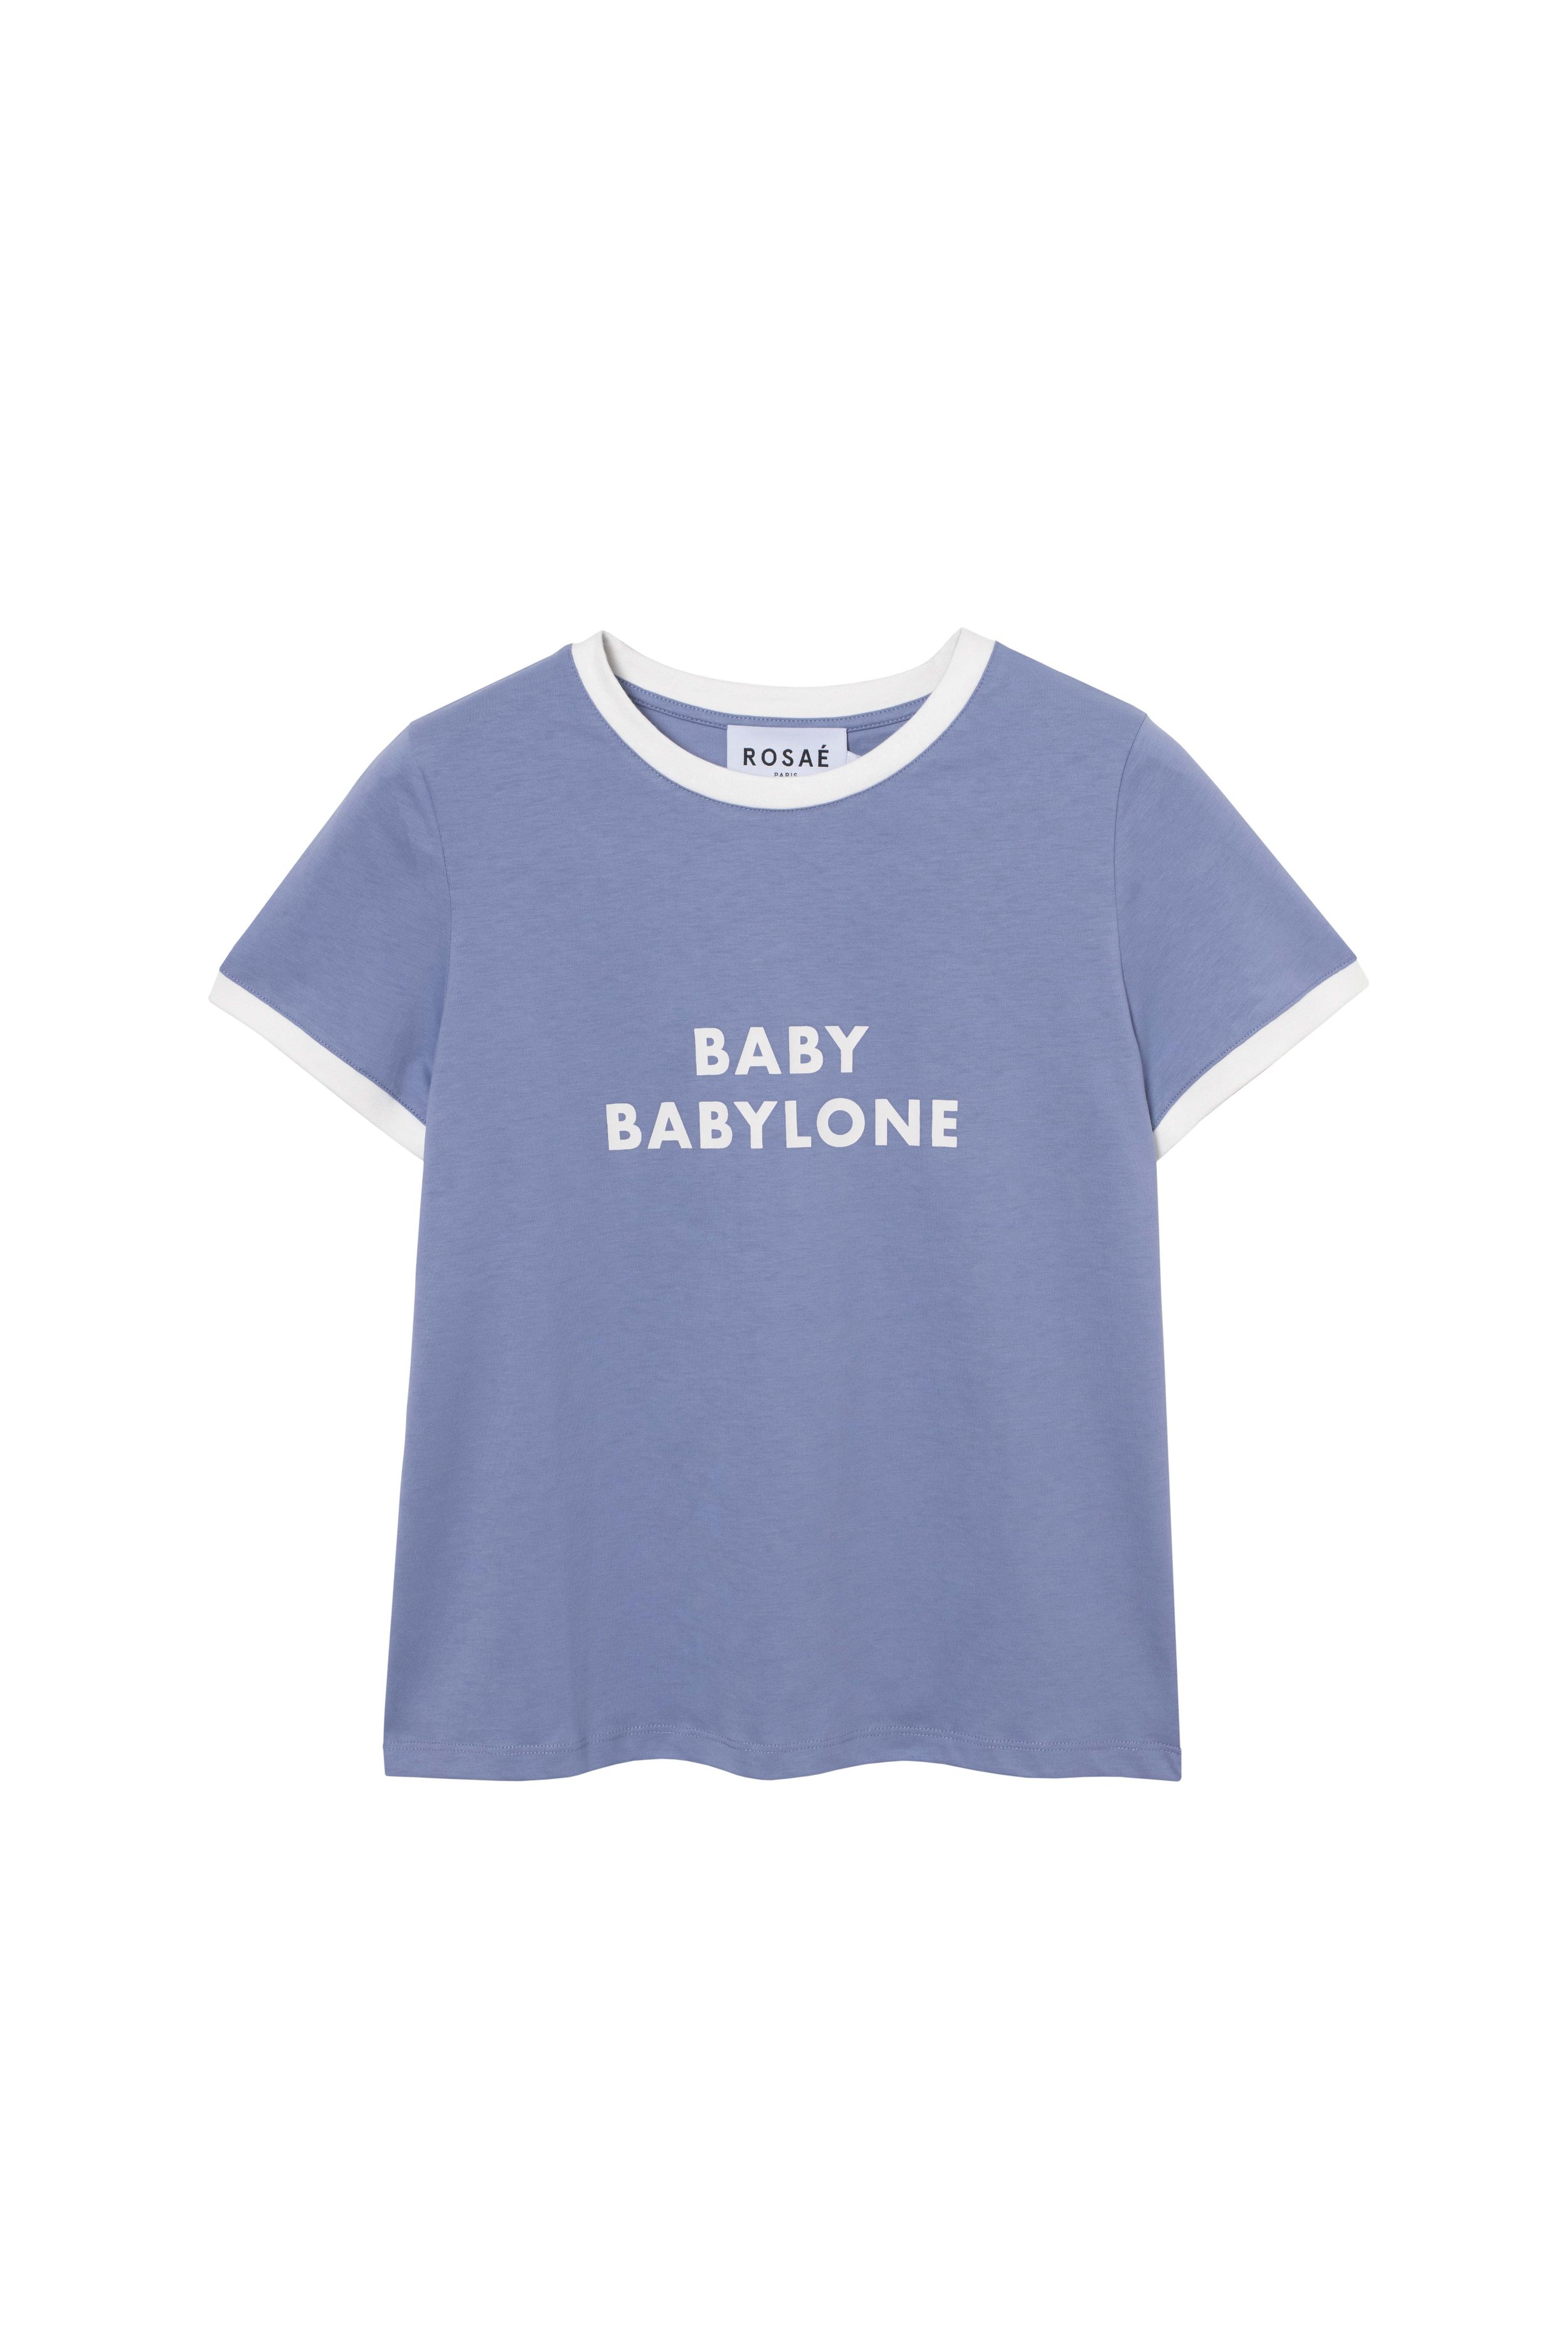 BABYLONE / Tシャツ